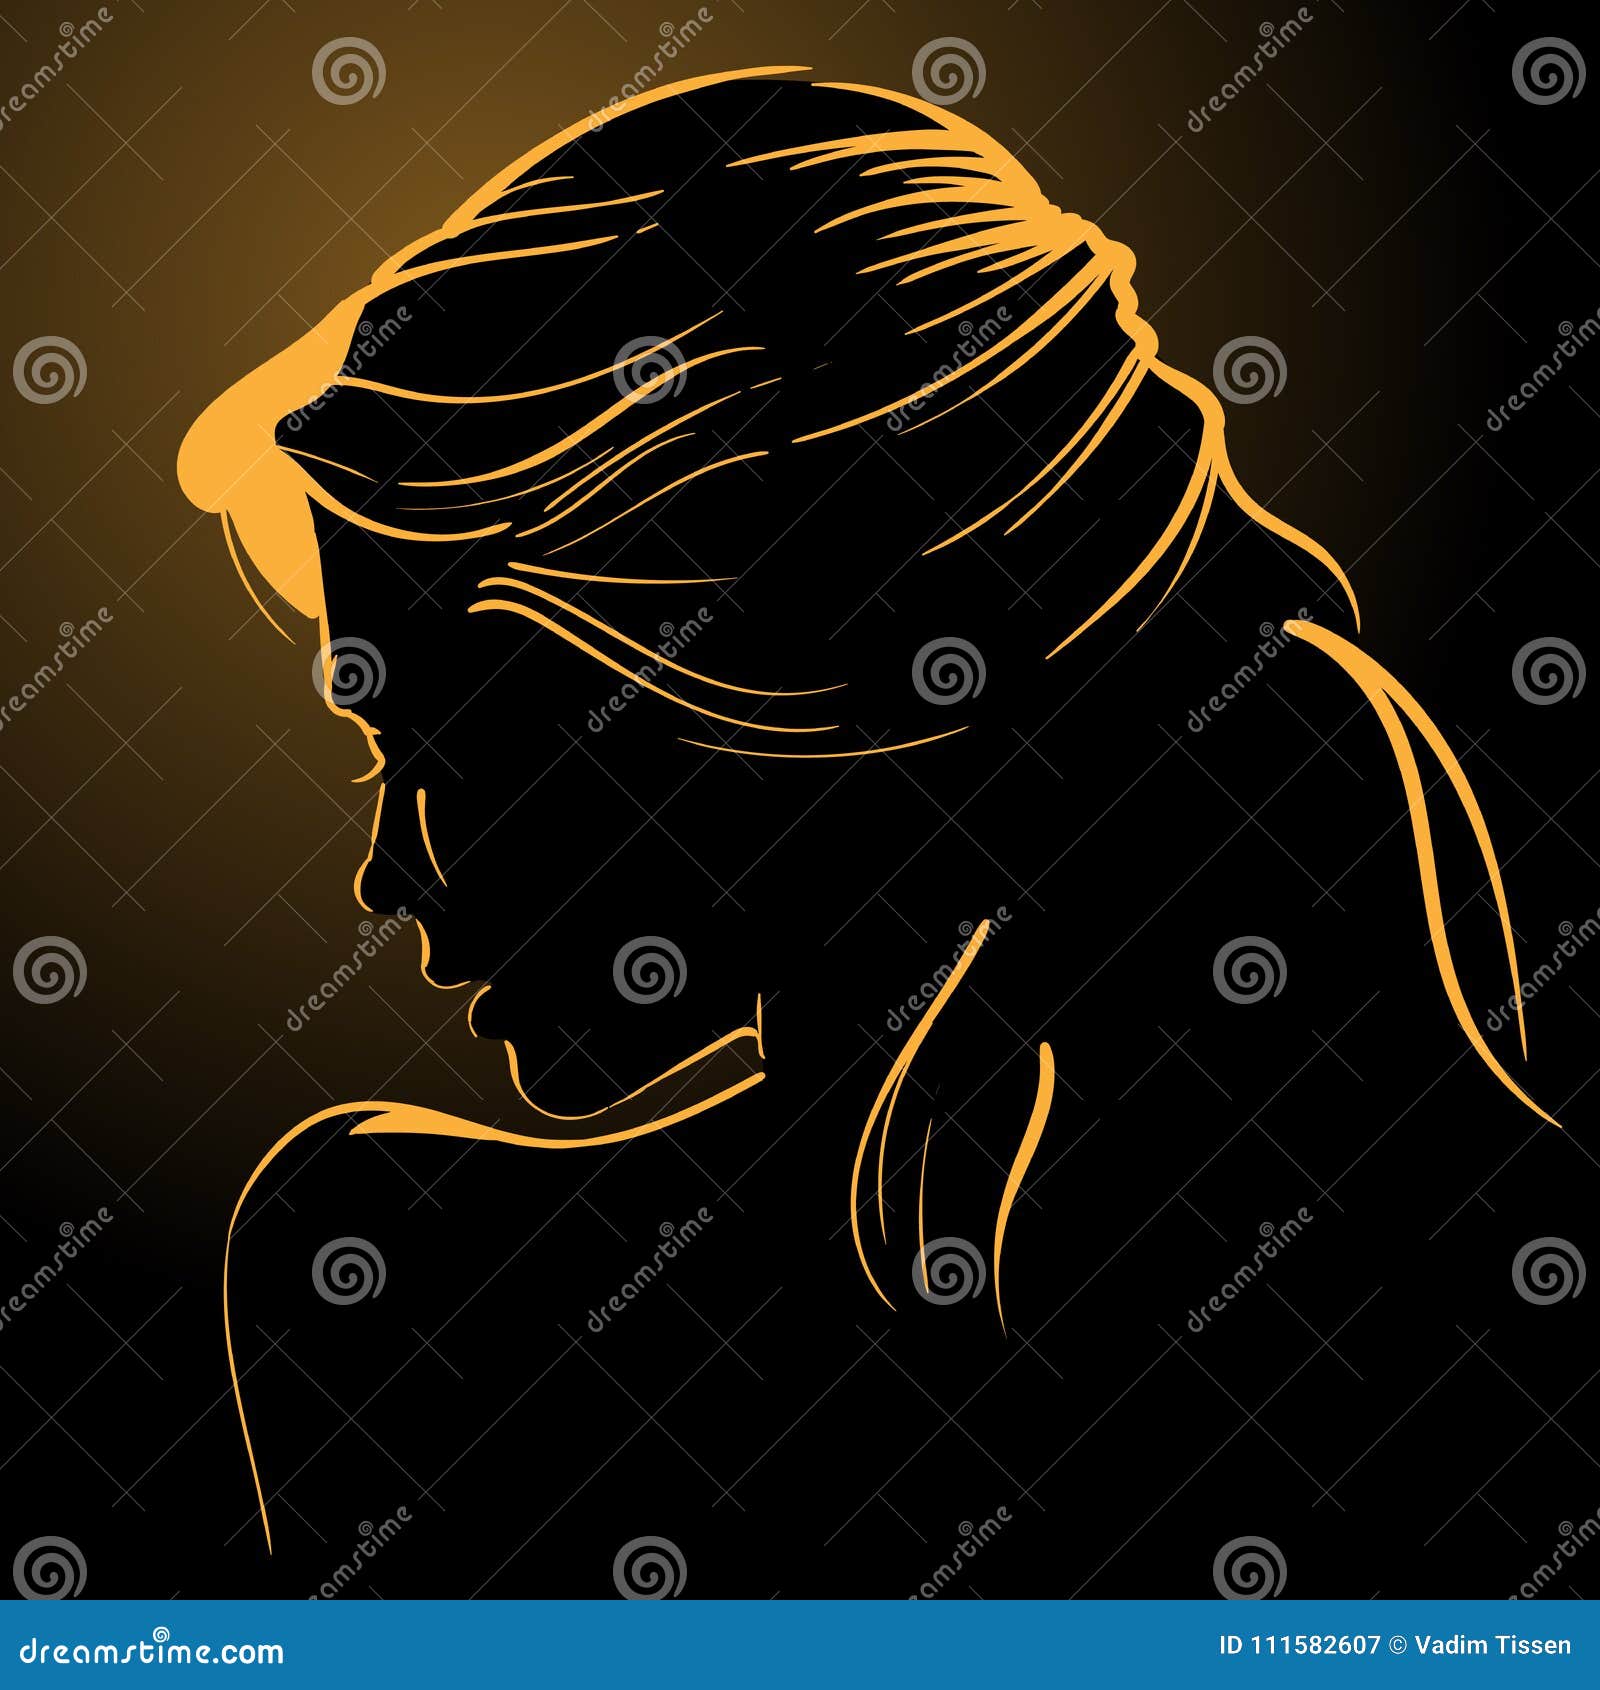 woman face silhouette in backlight. low key.